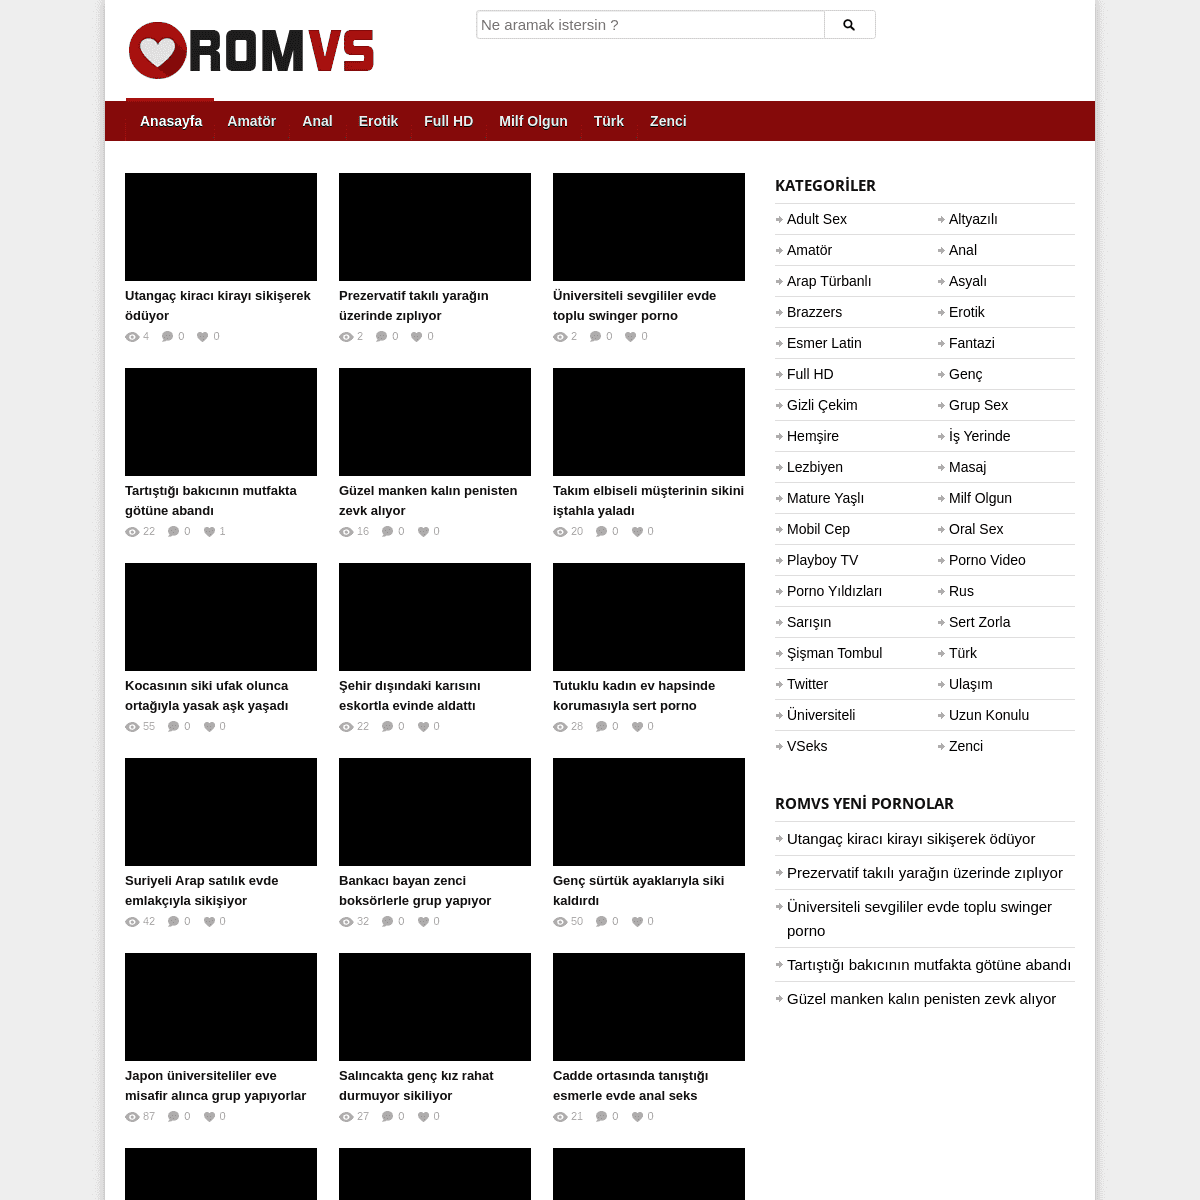 A complete backup of https://romvs.com